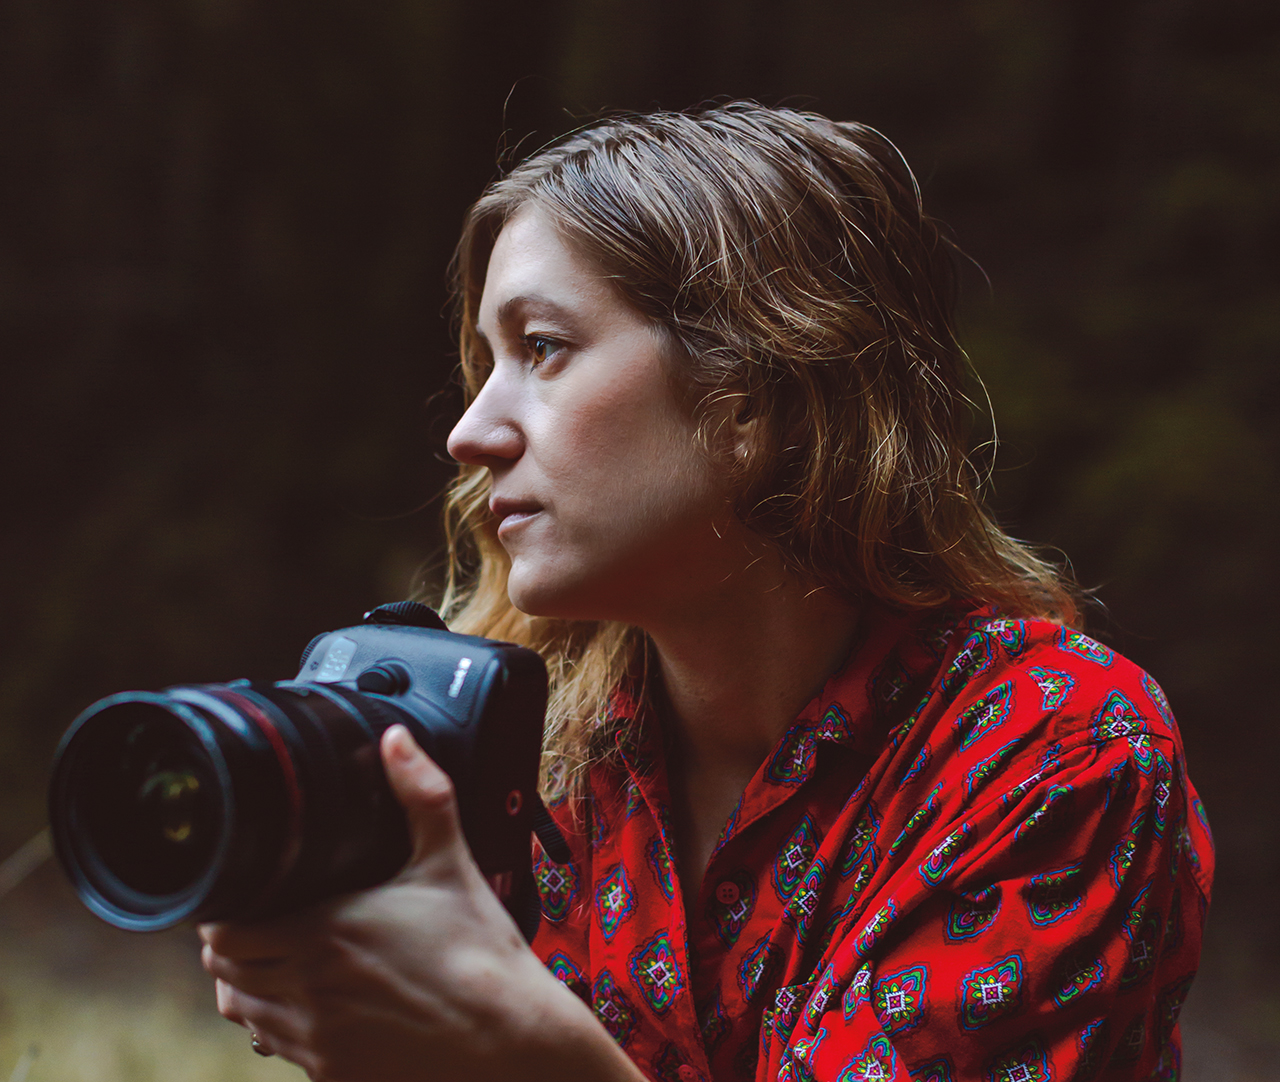 Rachel Bujalski ’11 with camera in hand